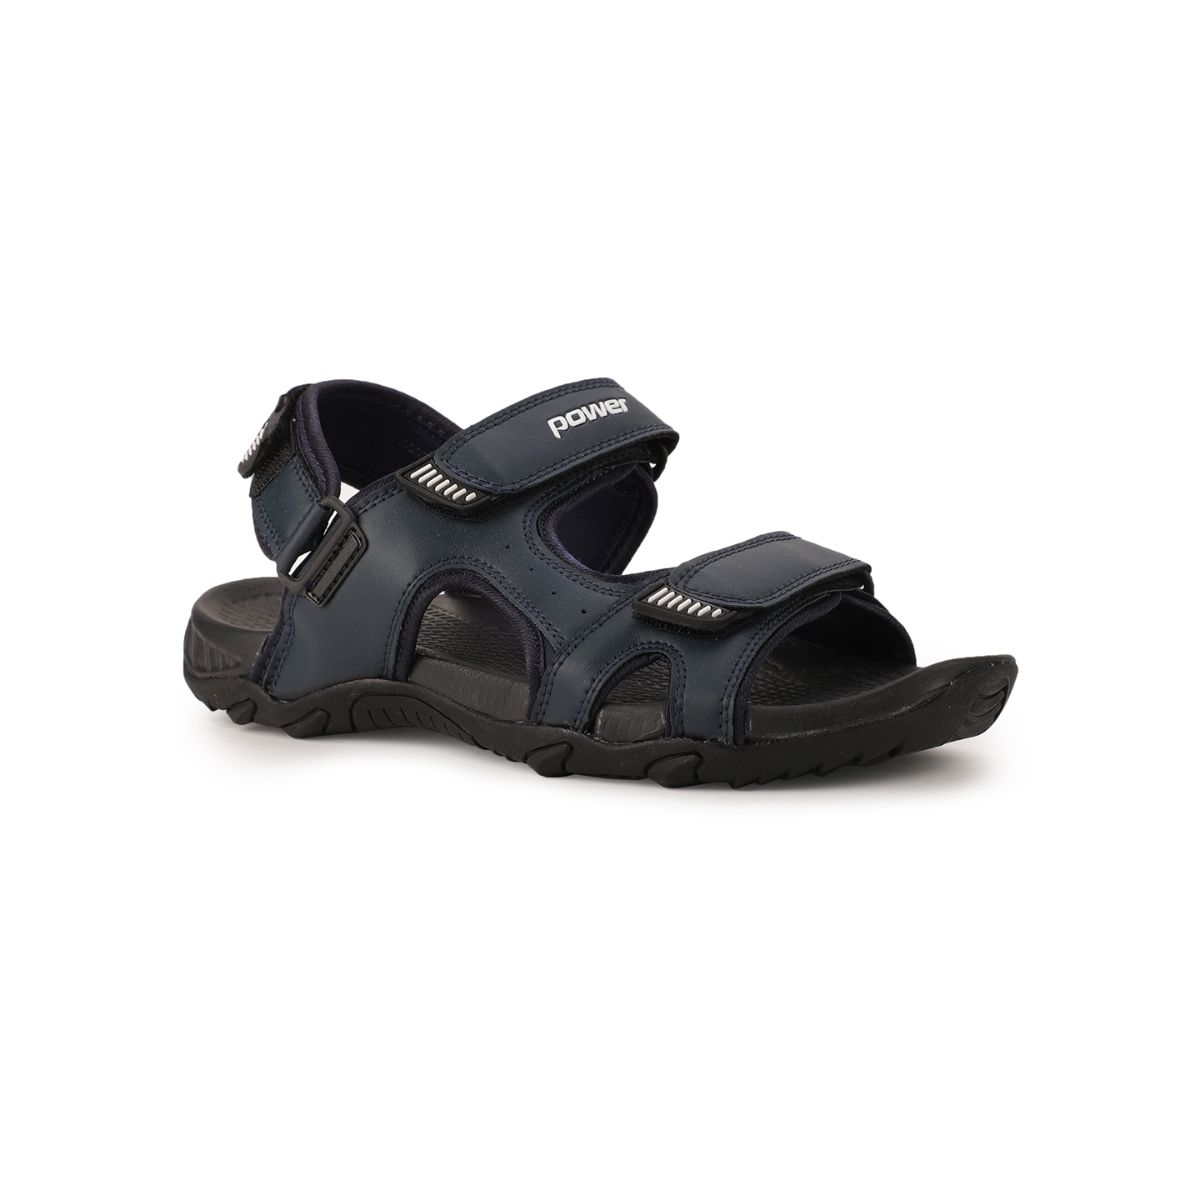 Buy Power Men Olive Velcro Sandals online